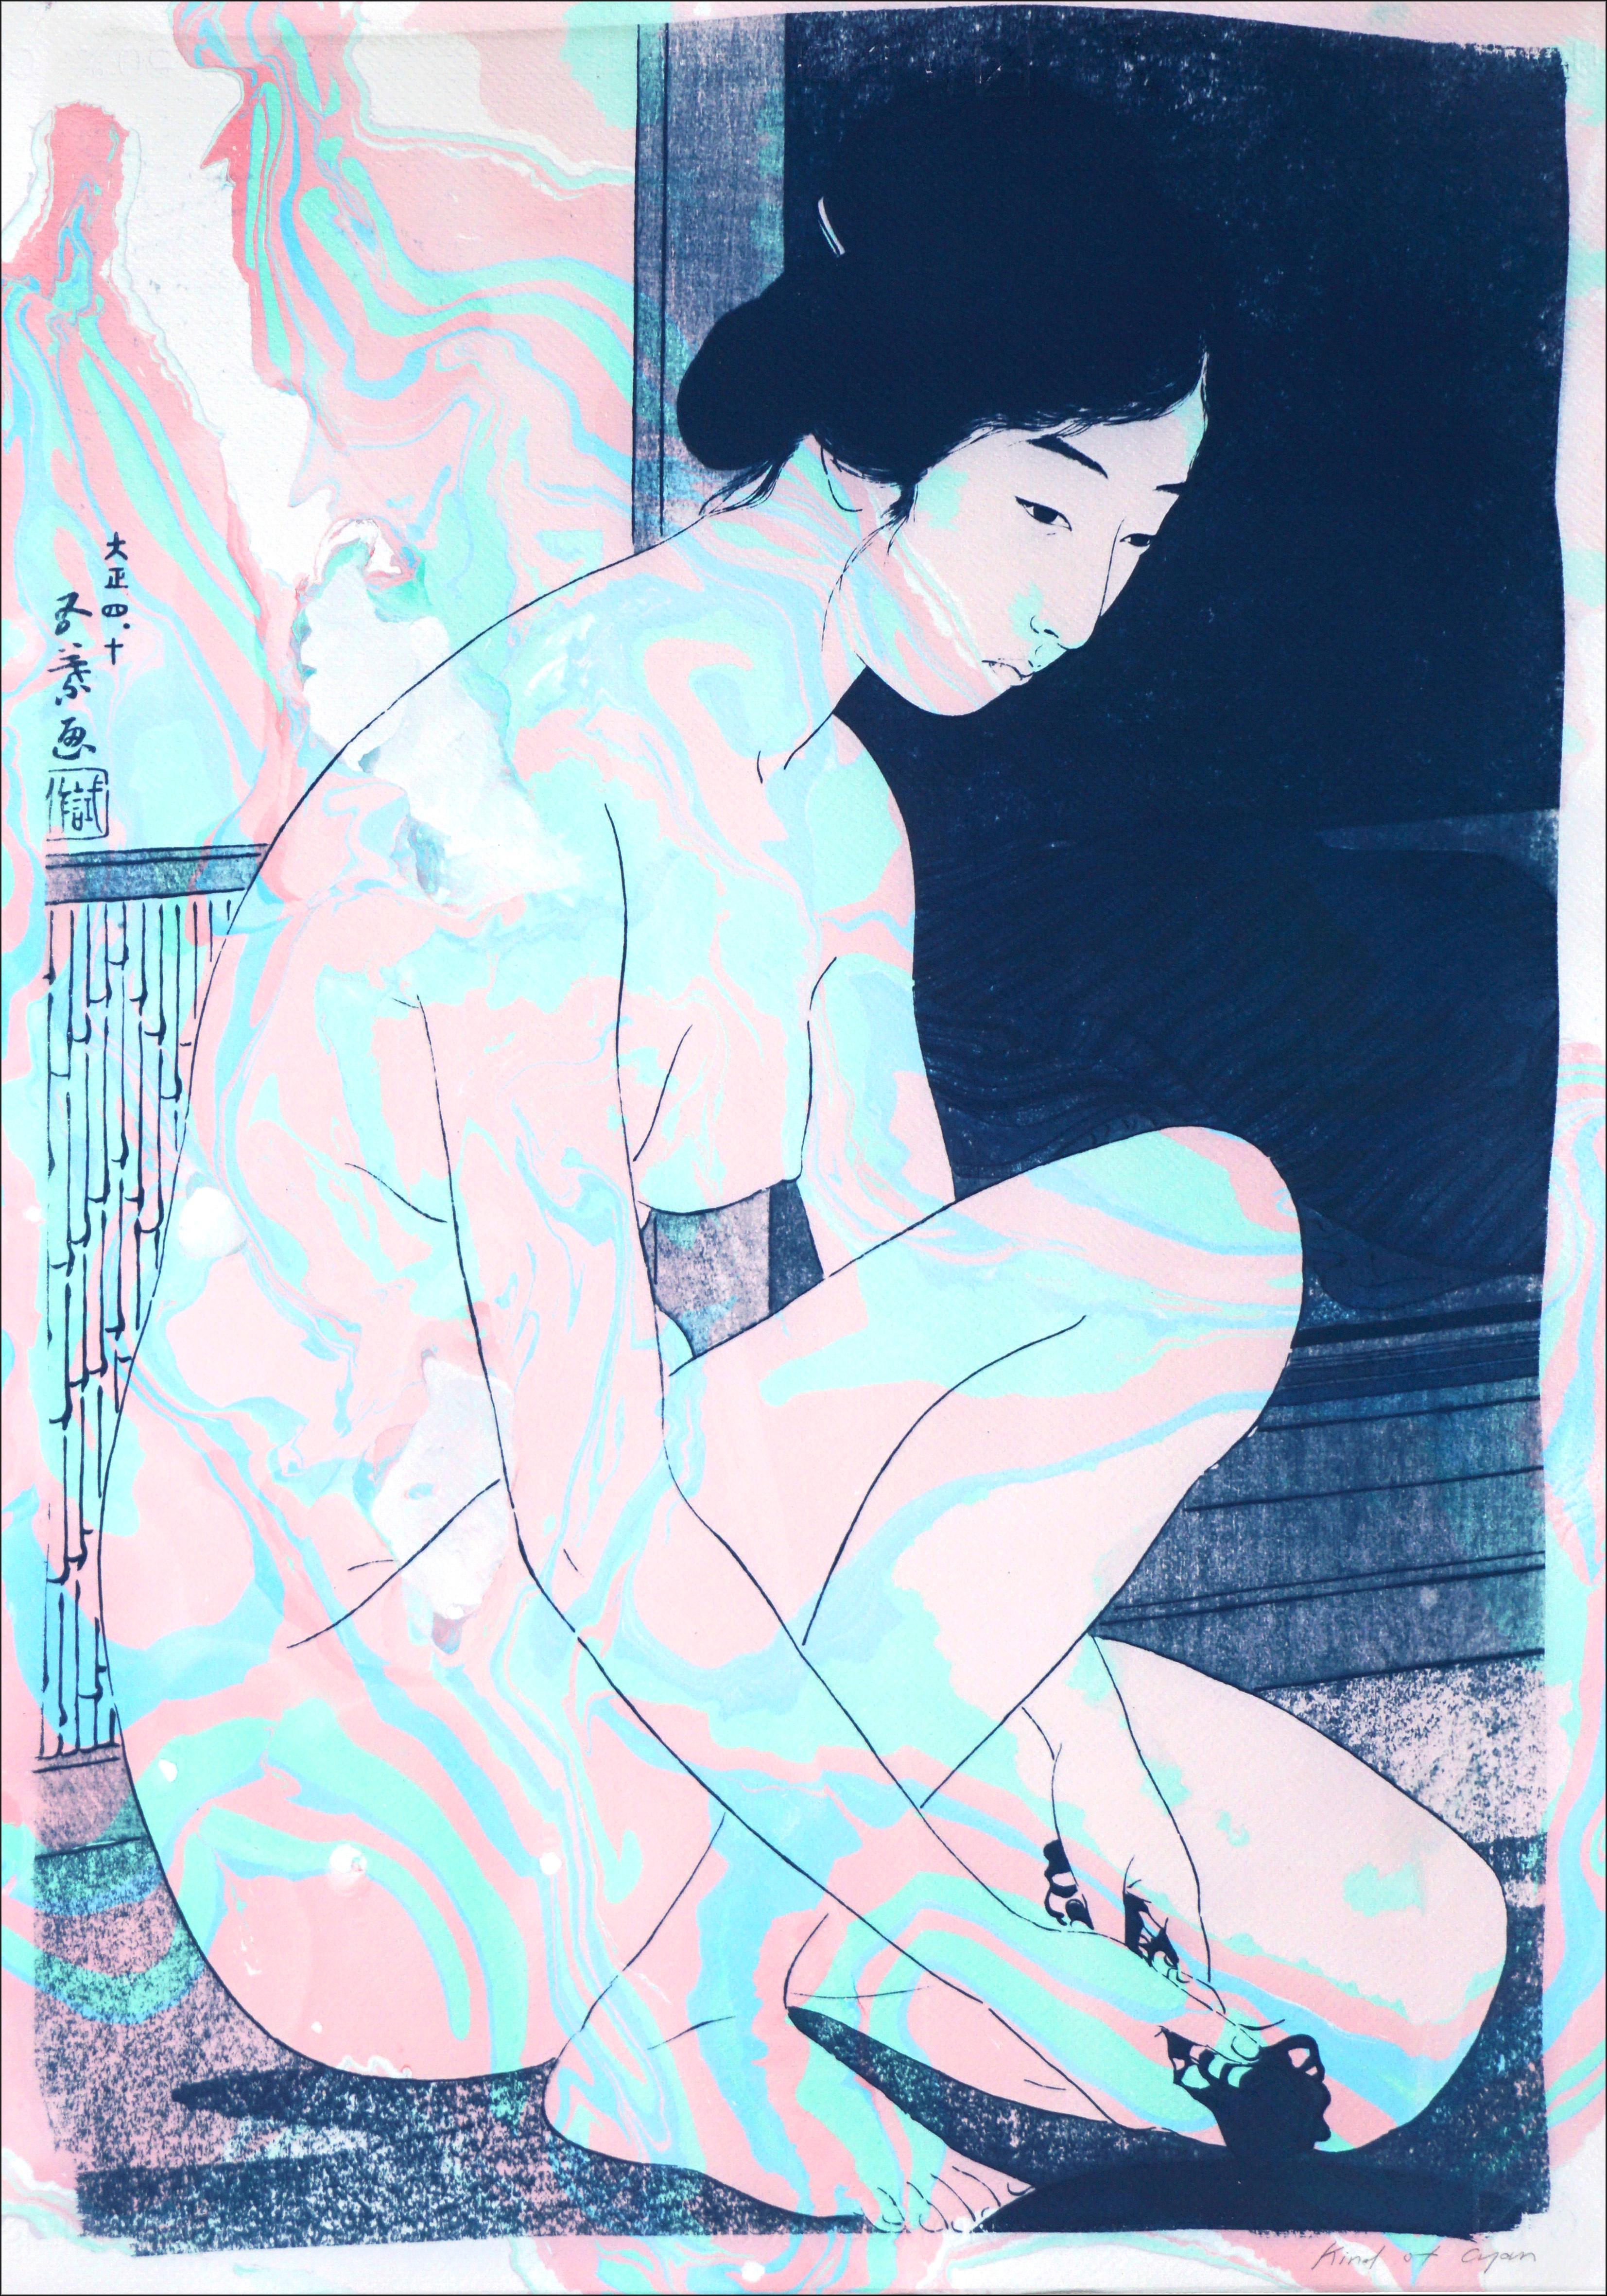 Kind of Cyan Nude Print – Traditionelle japanische Szene, Geisha-Akt, Ukiyo-e-Stil, Mixed Media-Marbling